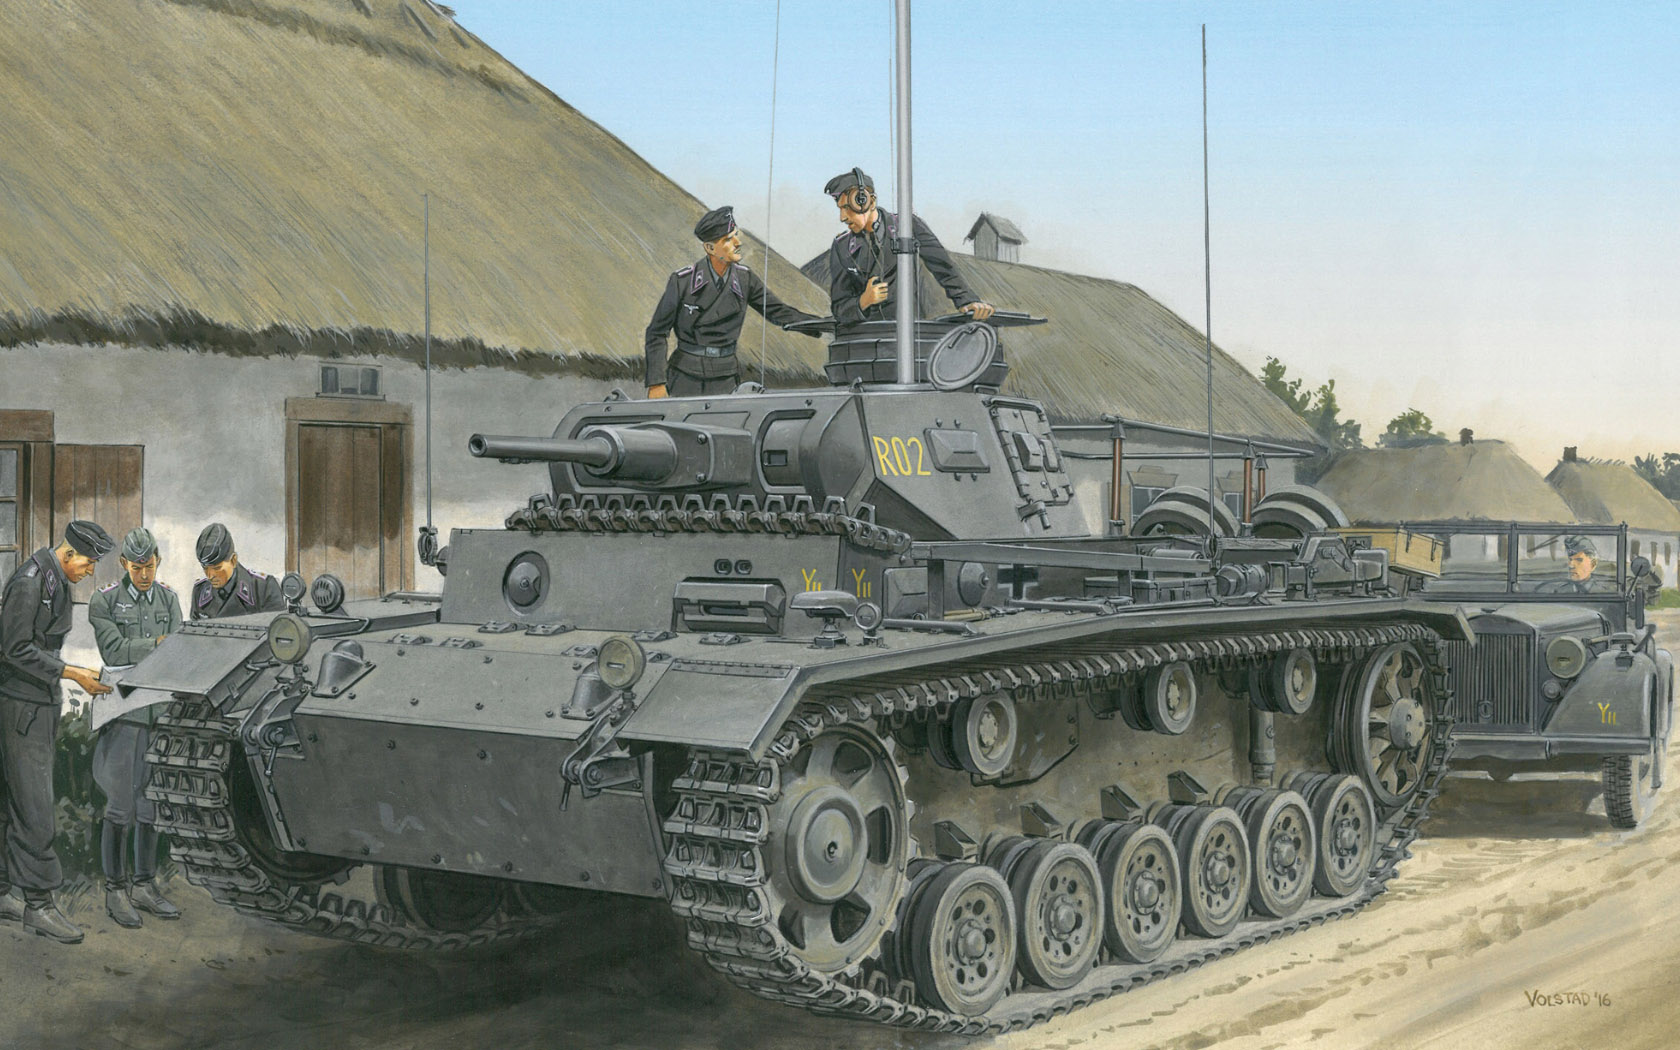 General 1680x1050 tank army military military vehicle hat soldier headphones artwork uniform house Panzer III German tanks men frontal view